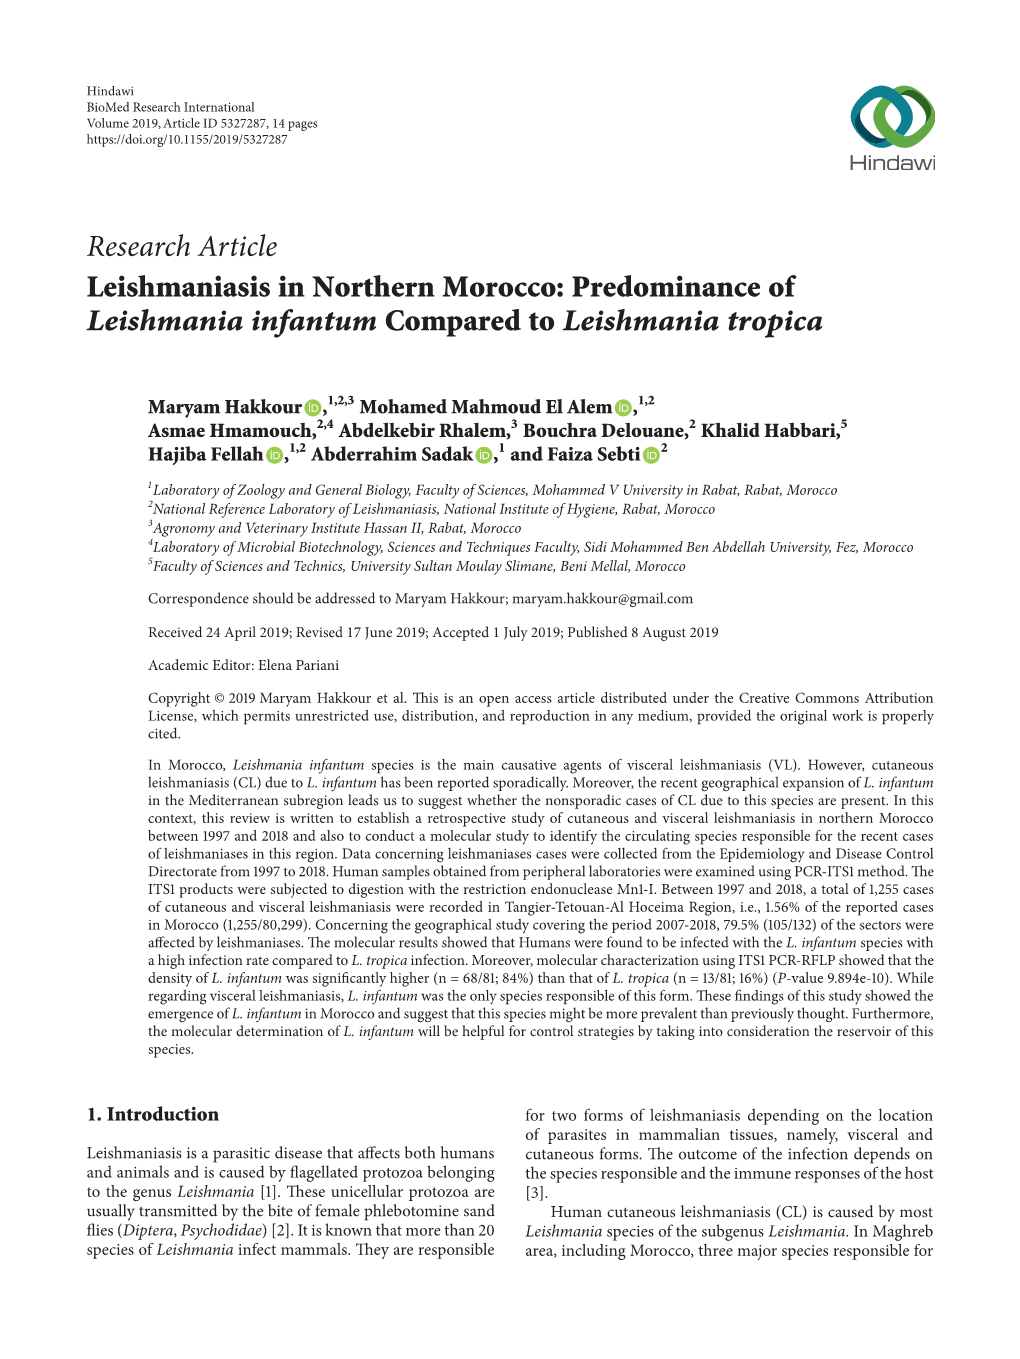 Leishmaniasis in Northern Morocco: Predominance of Leishmania Infantum Compared to Leishmania Tropica